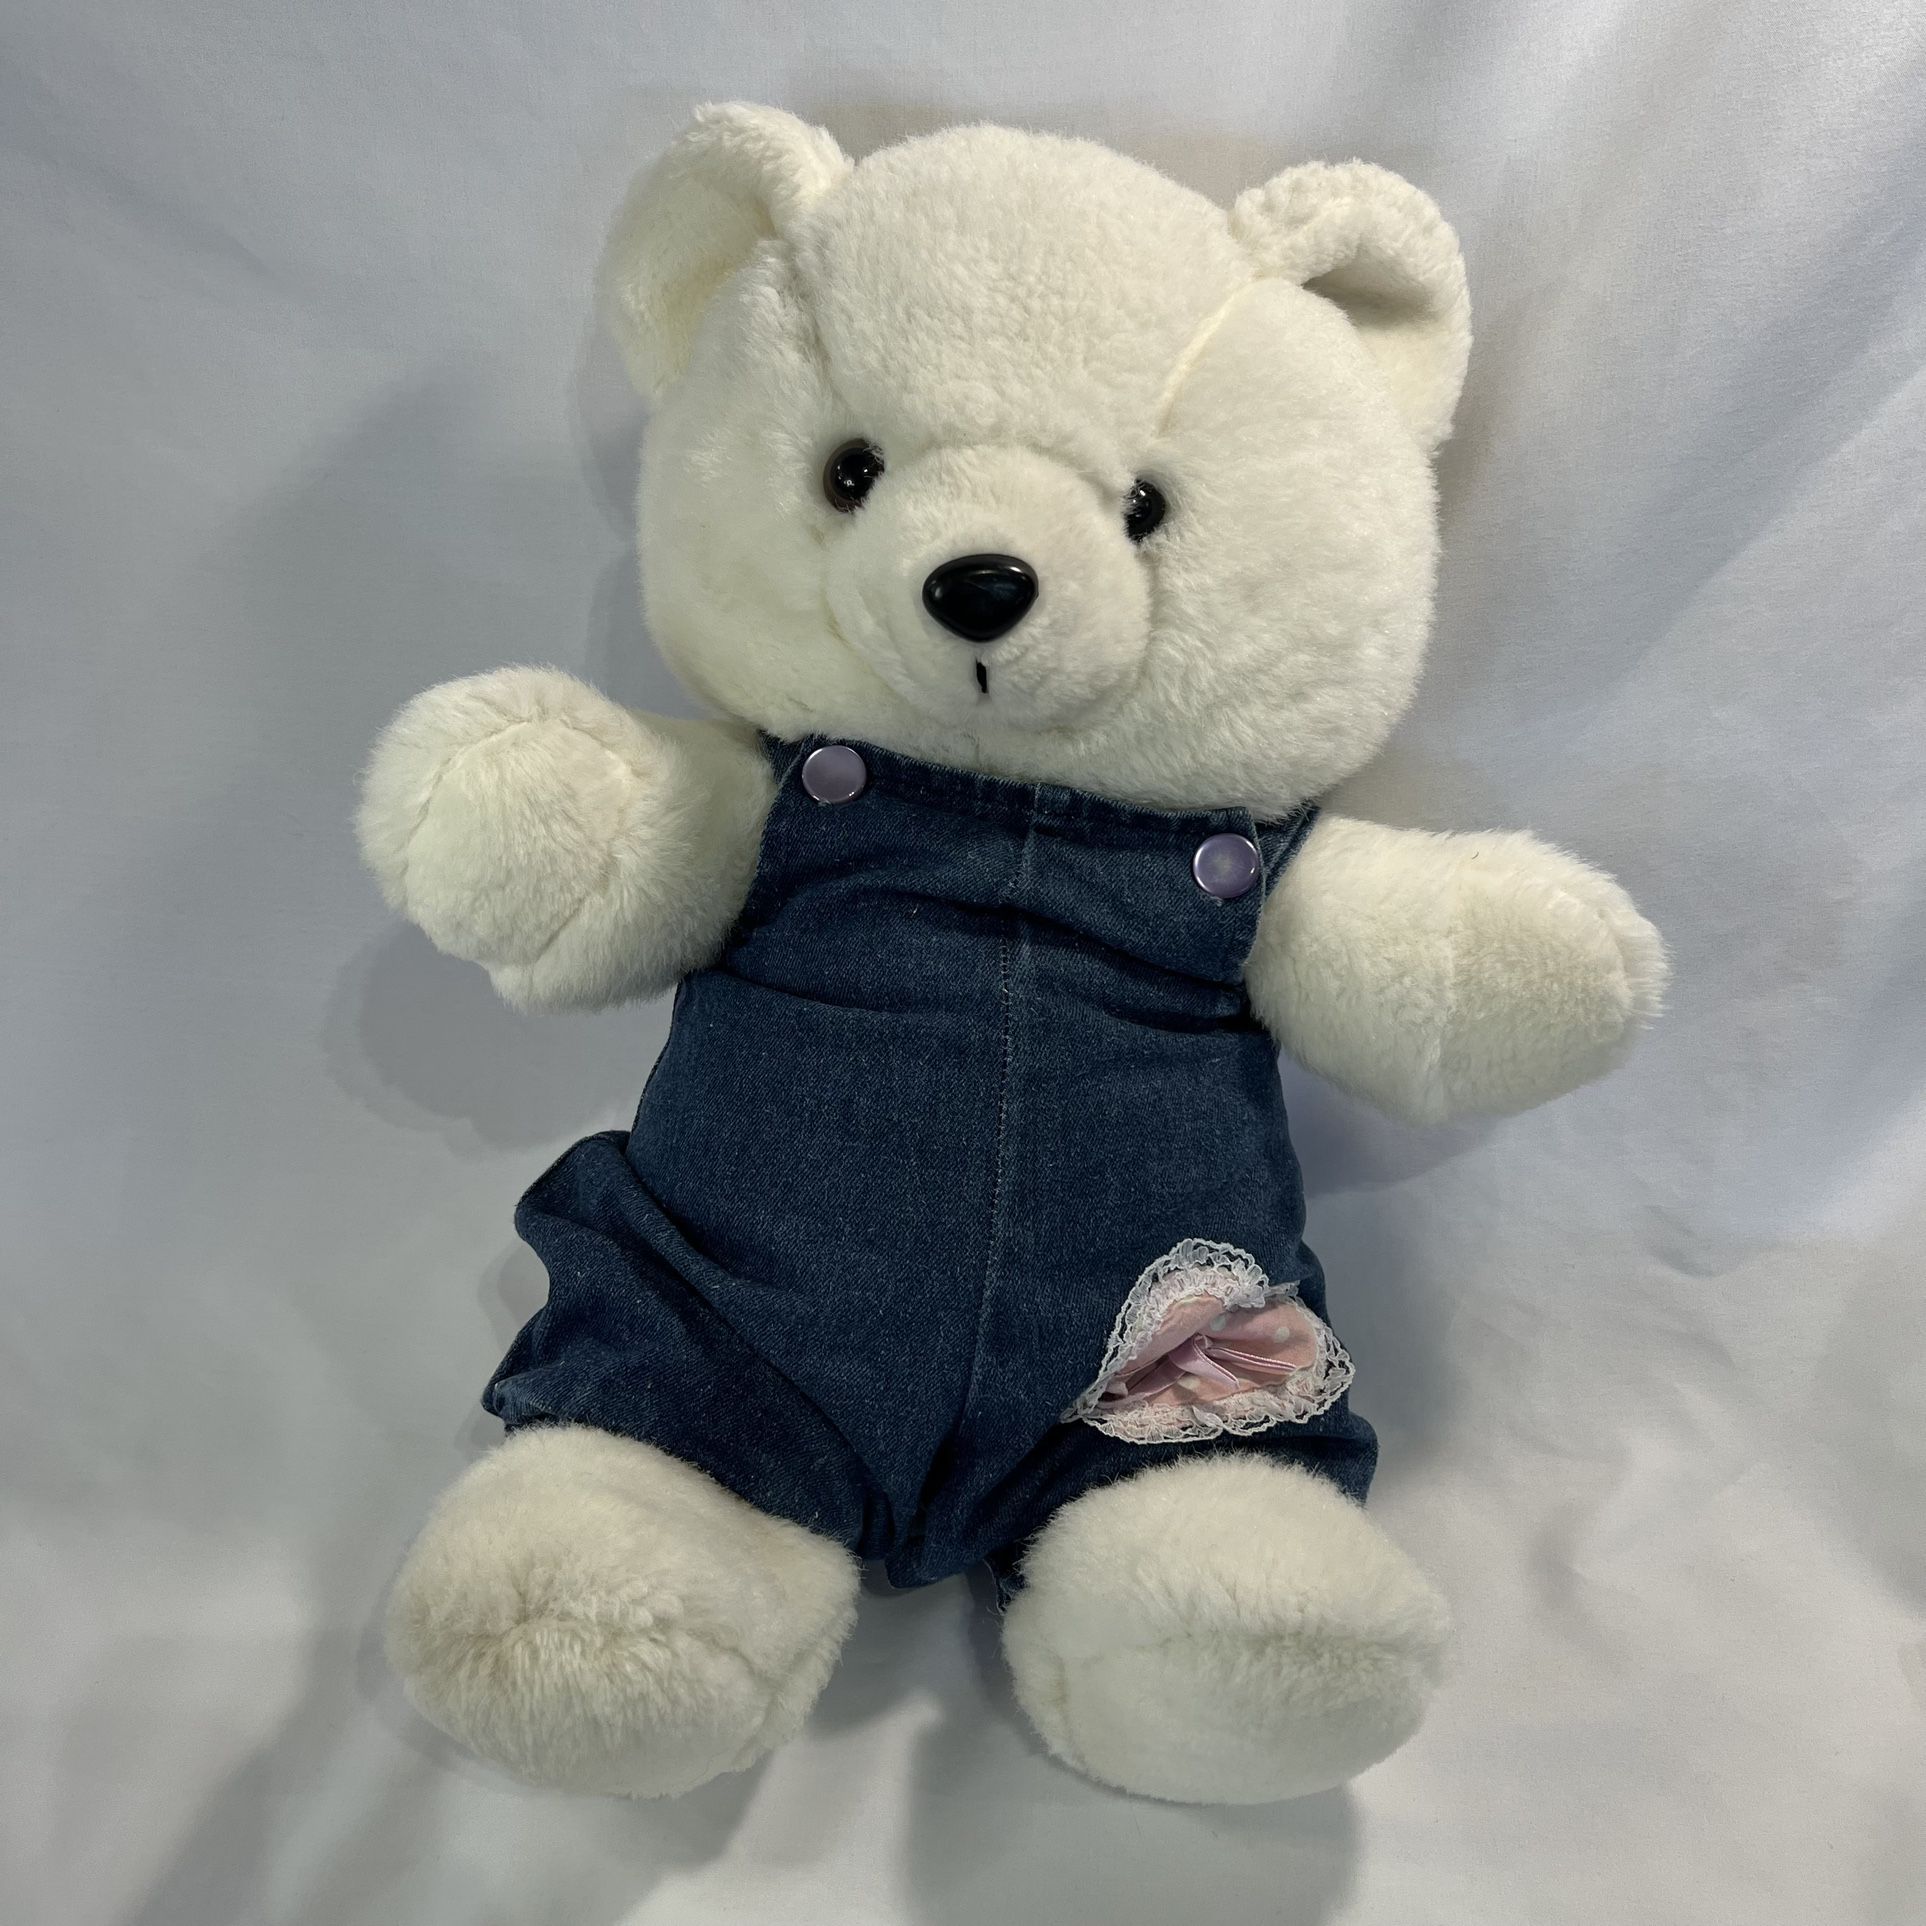 1986 Vintage K-Mart 16” Teddy Bear In Cute Overalls!